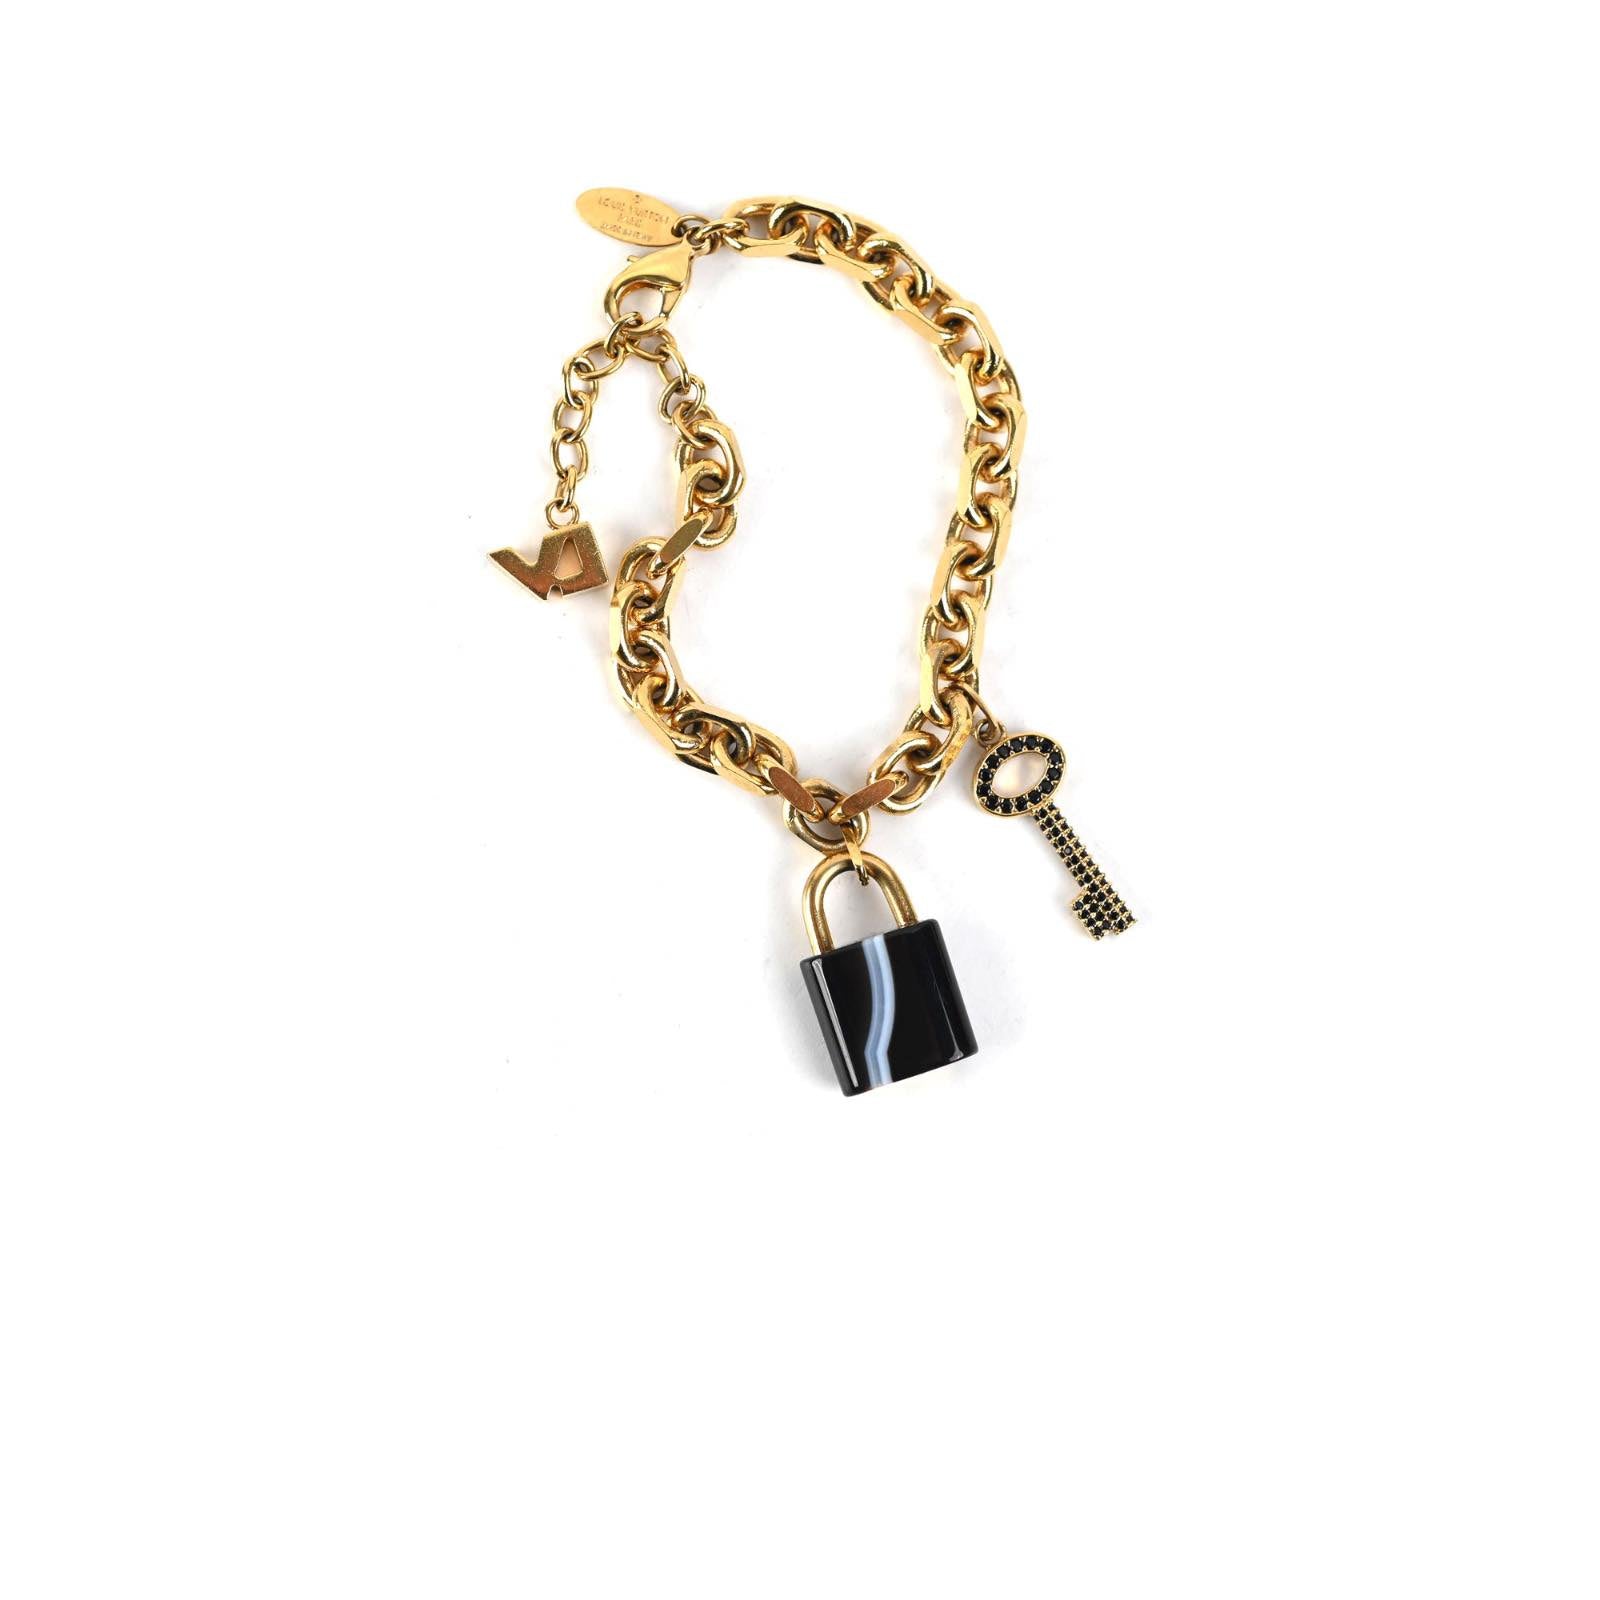 Louis Vuitton Padlock with Bracelet